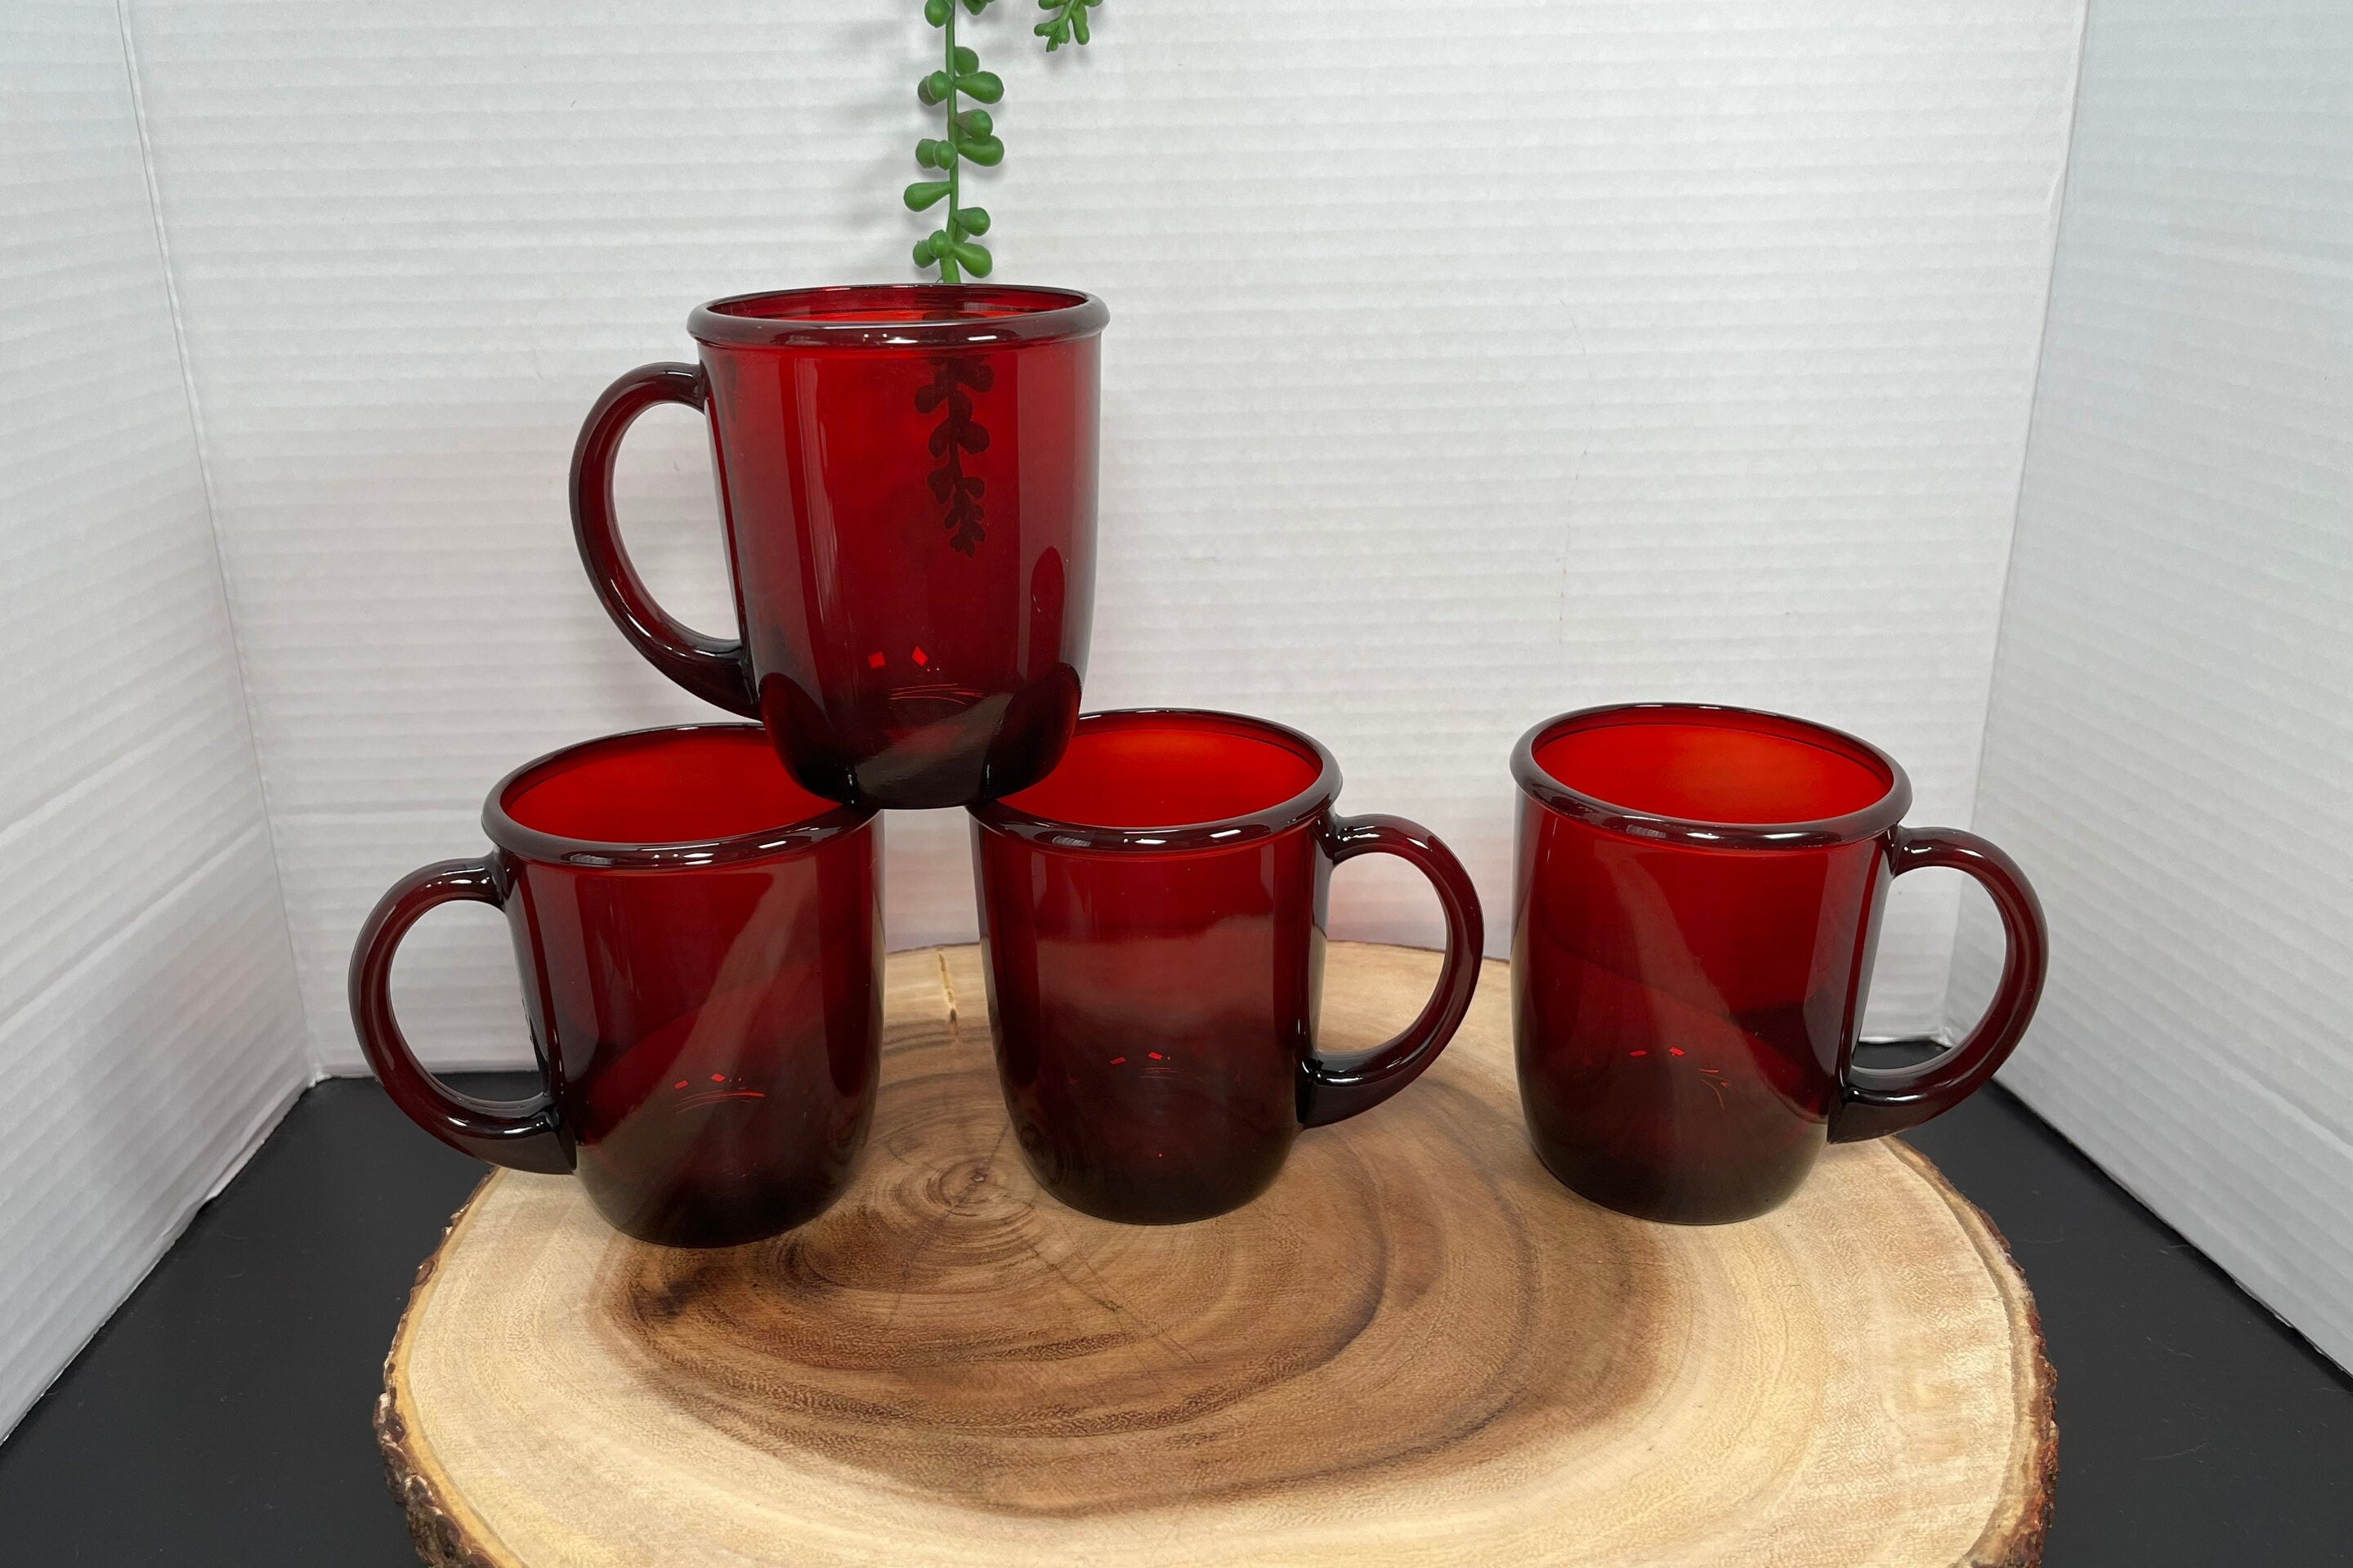 Arcoroc Classique Clear Mugs - Set of 4